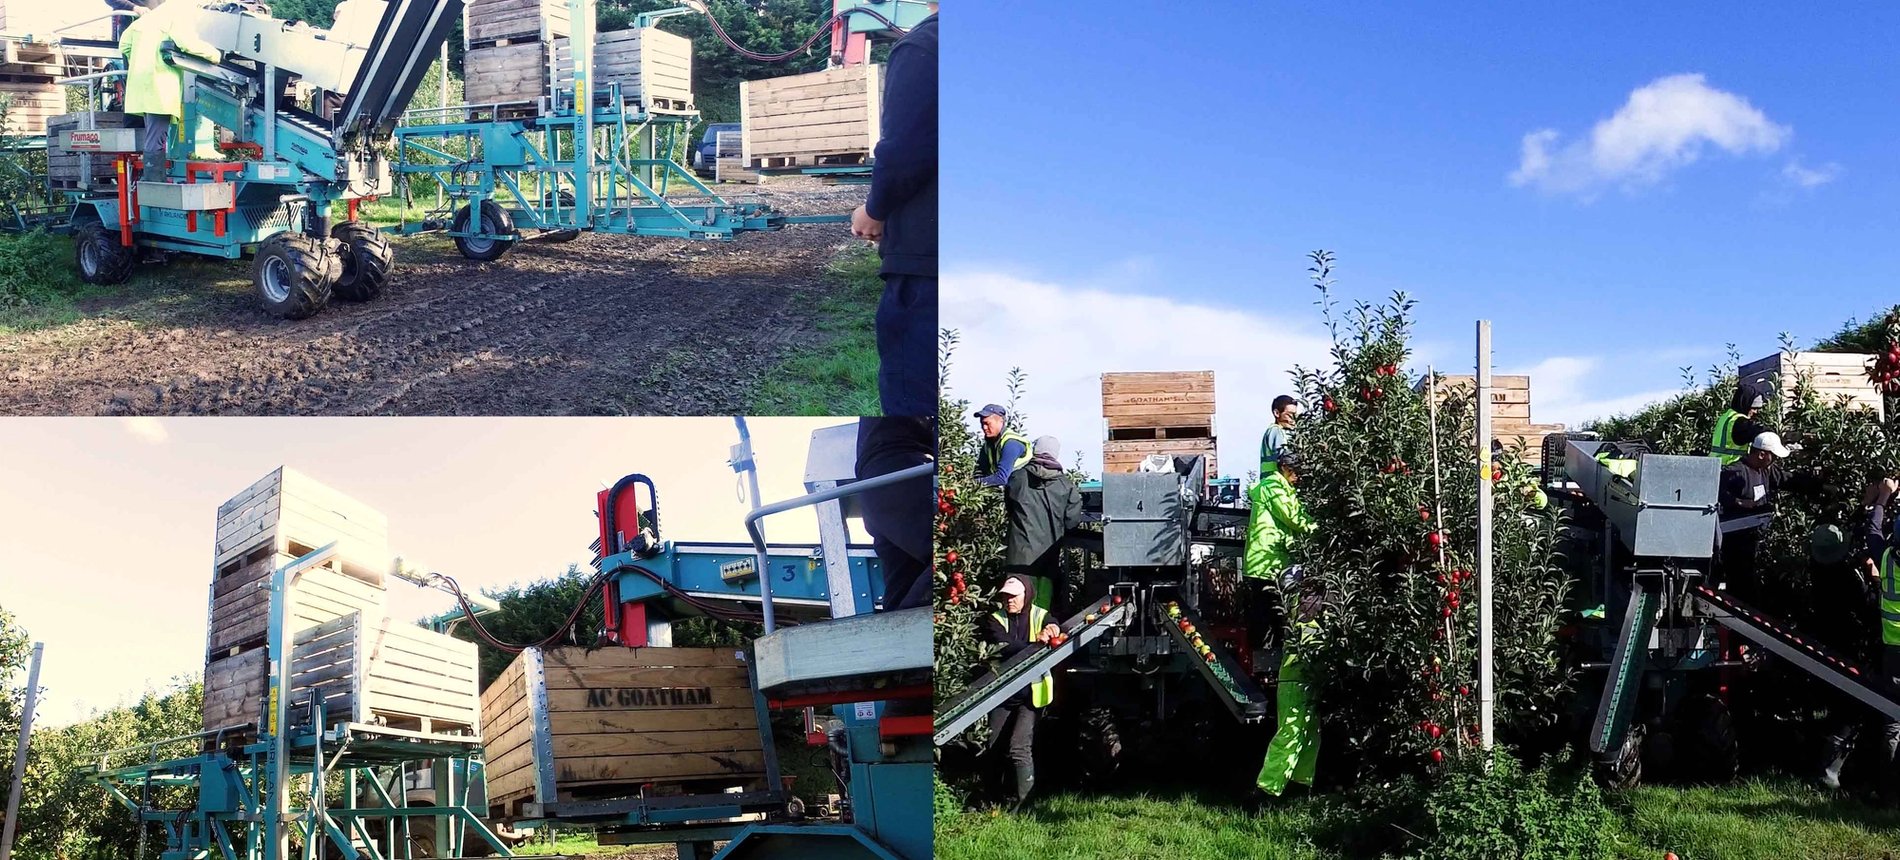 20 Tecnofruit Orchard Harvesters at UK Fruit Grower AC Goathams!